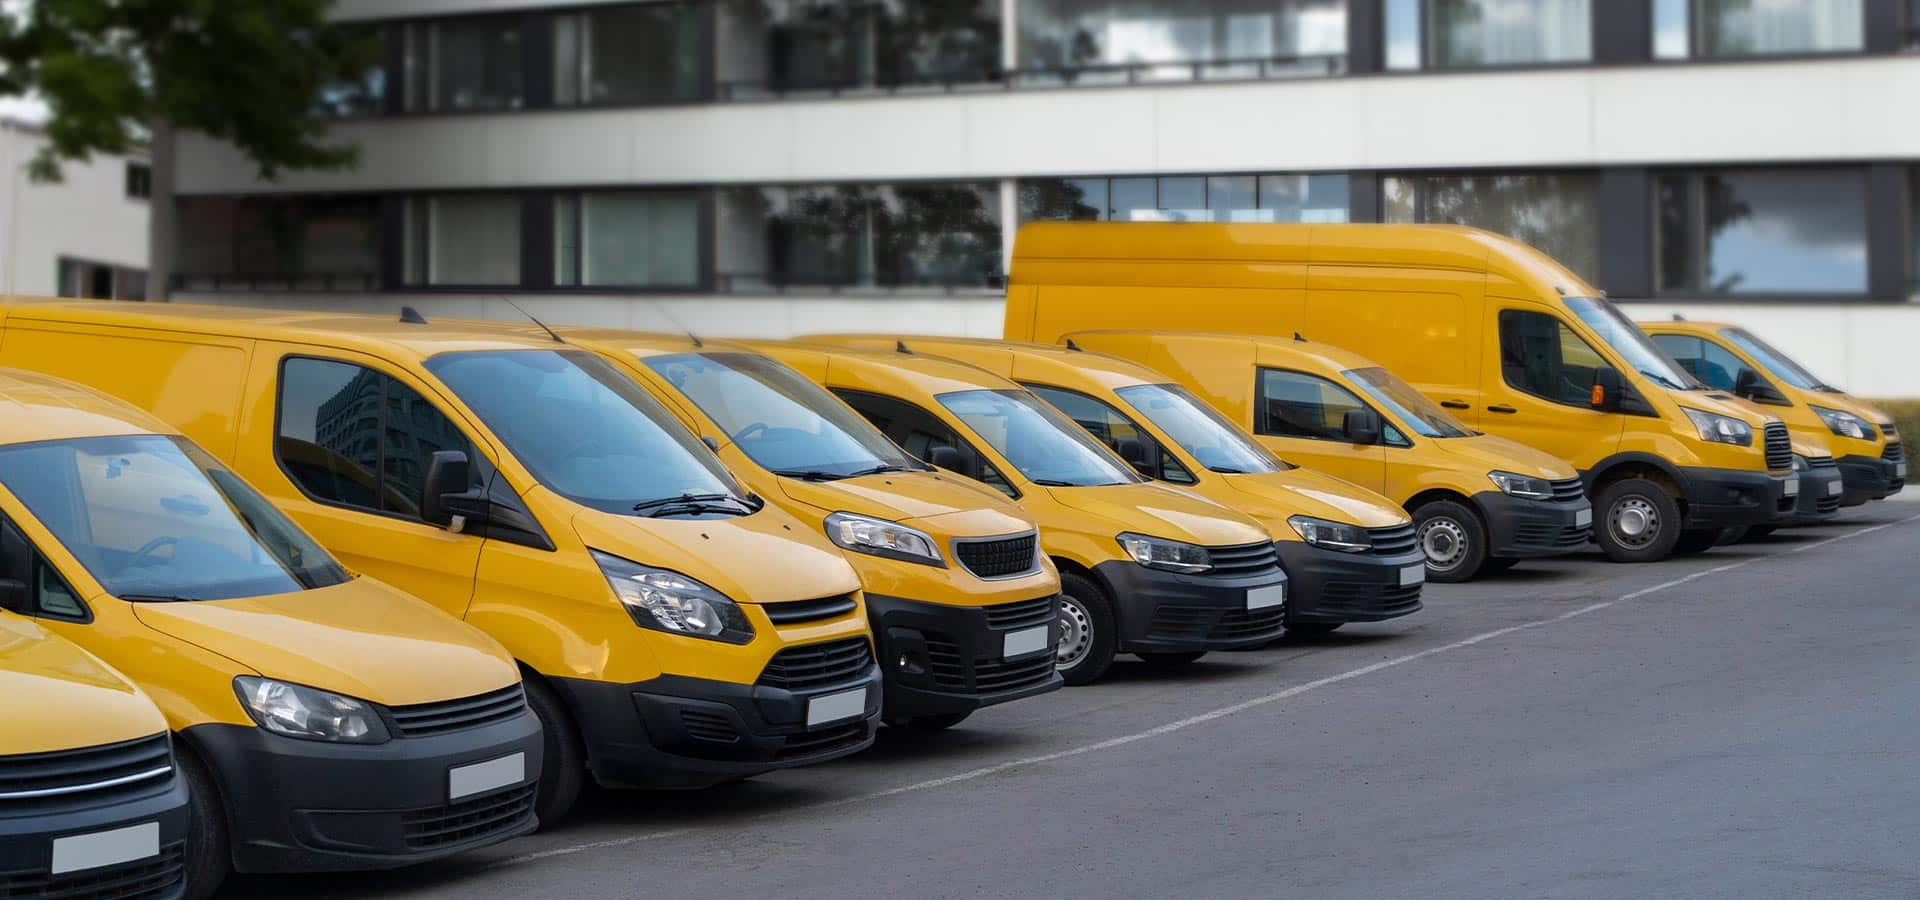 Yellow work vans in a row